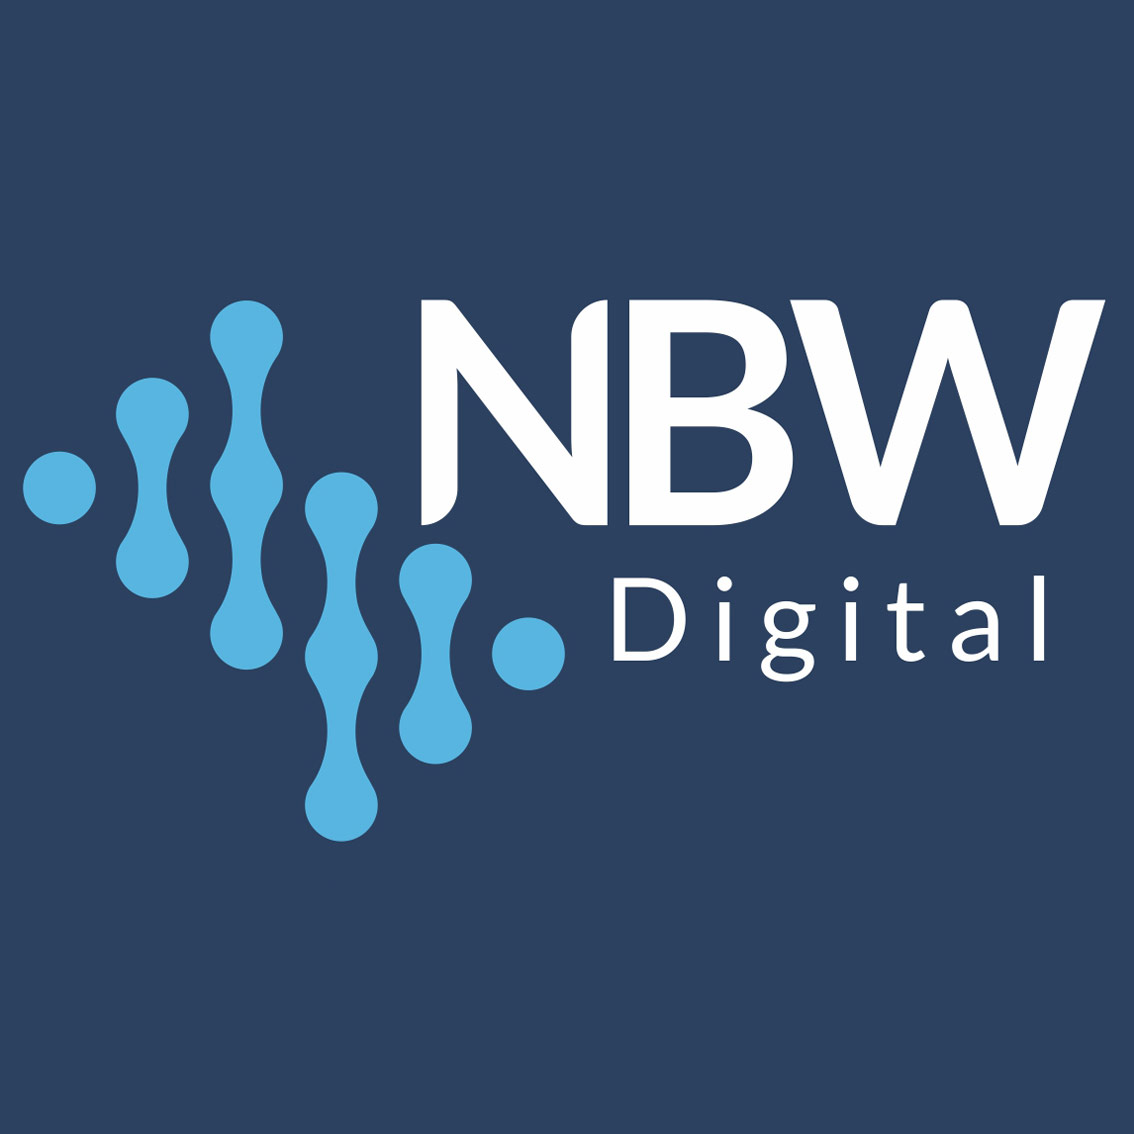 Nbw Digital